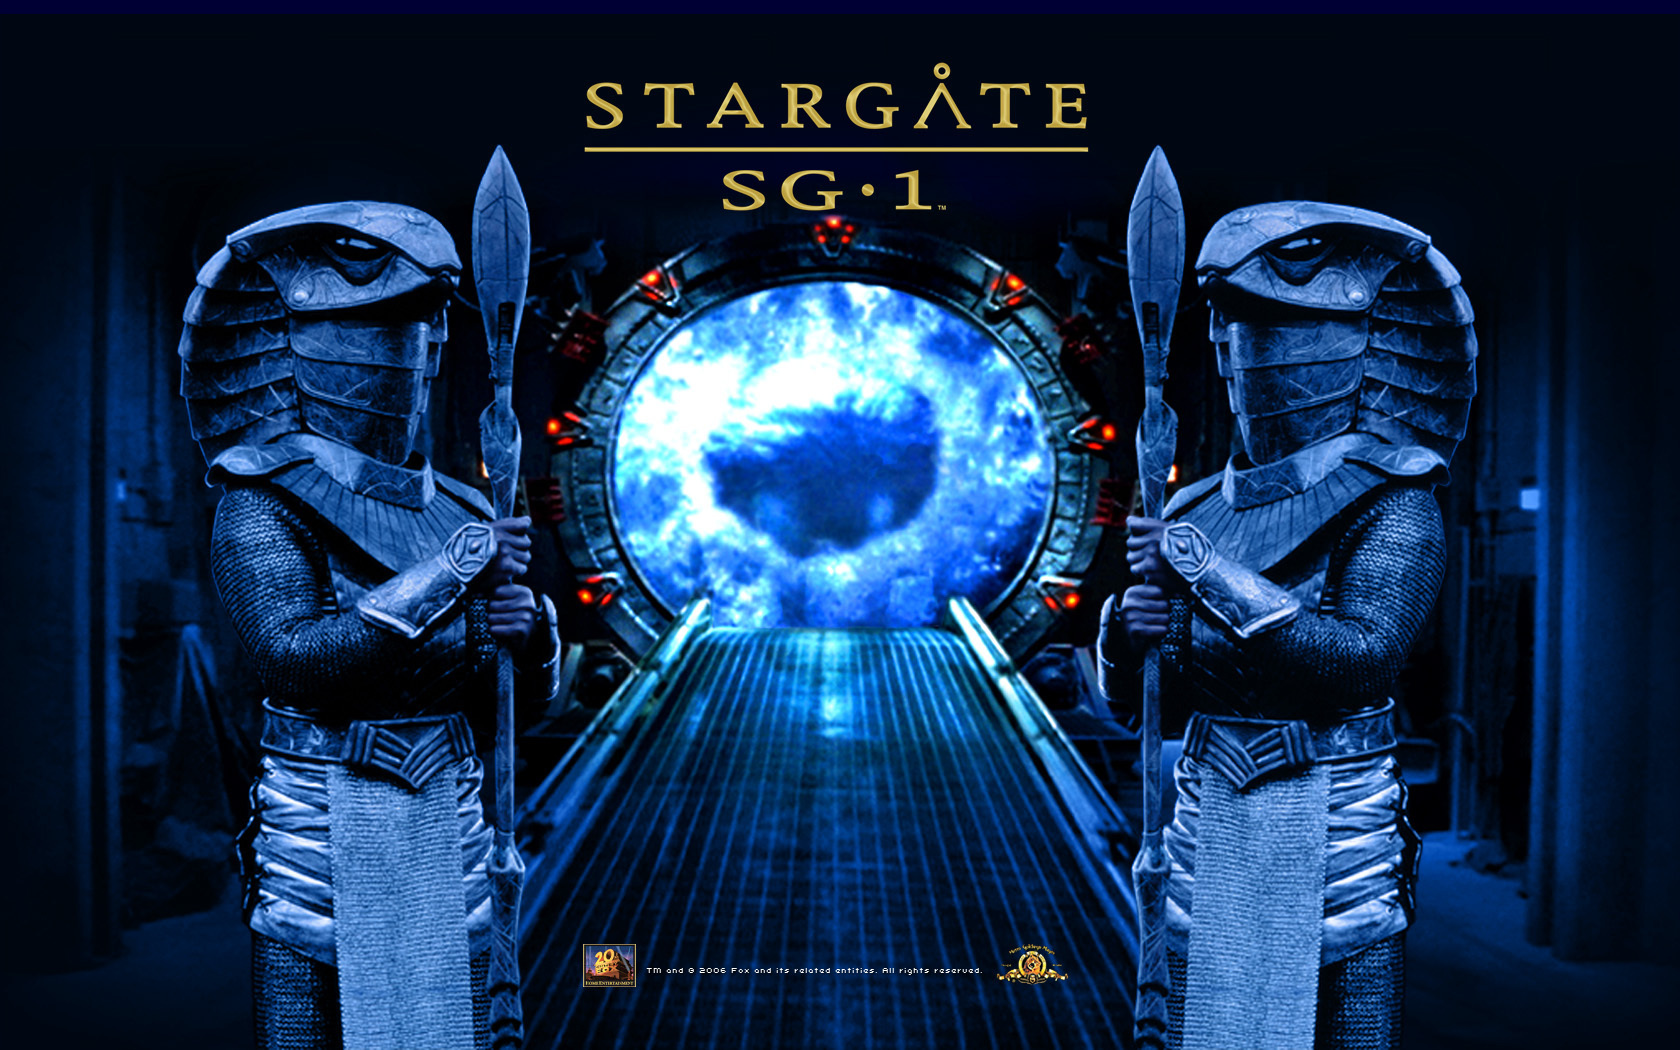 Sg1 - Stargate SG 1 Wallpaper 9102331 - Fanpop